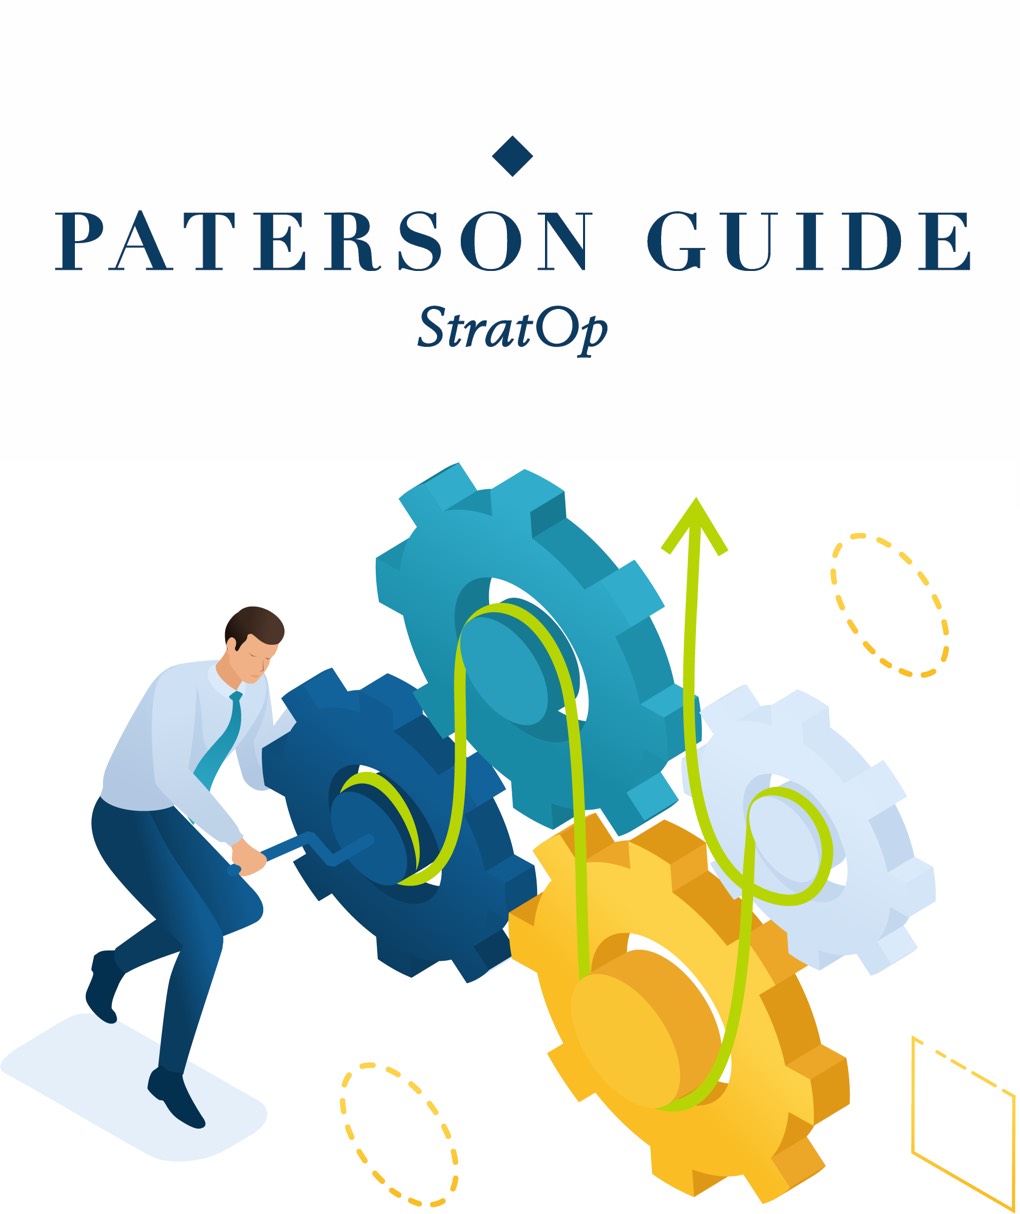 Patterson Guide